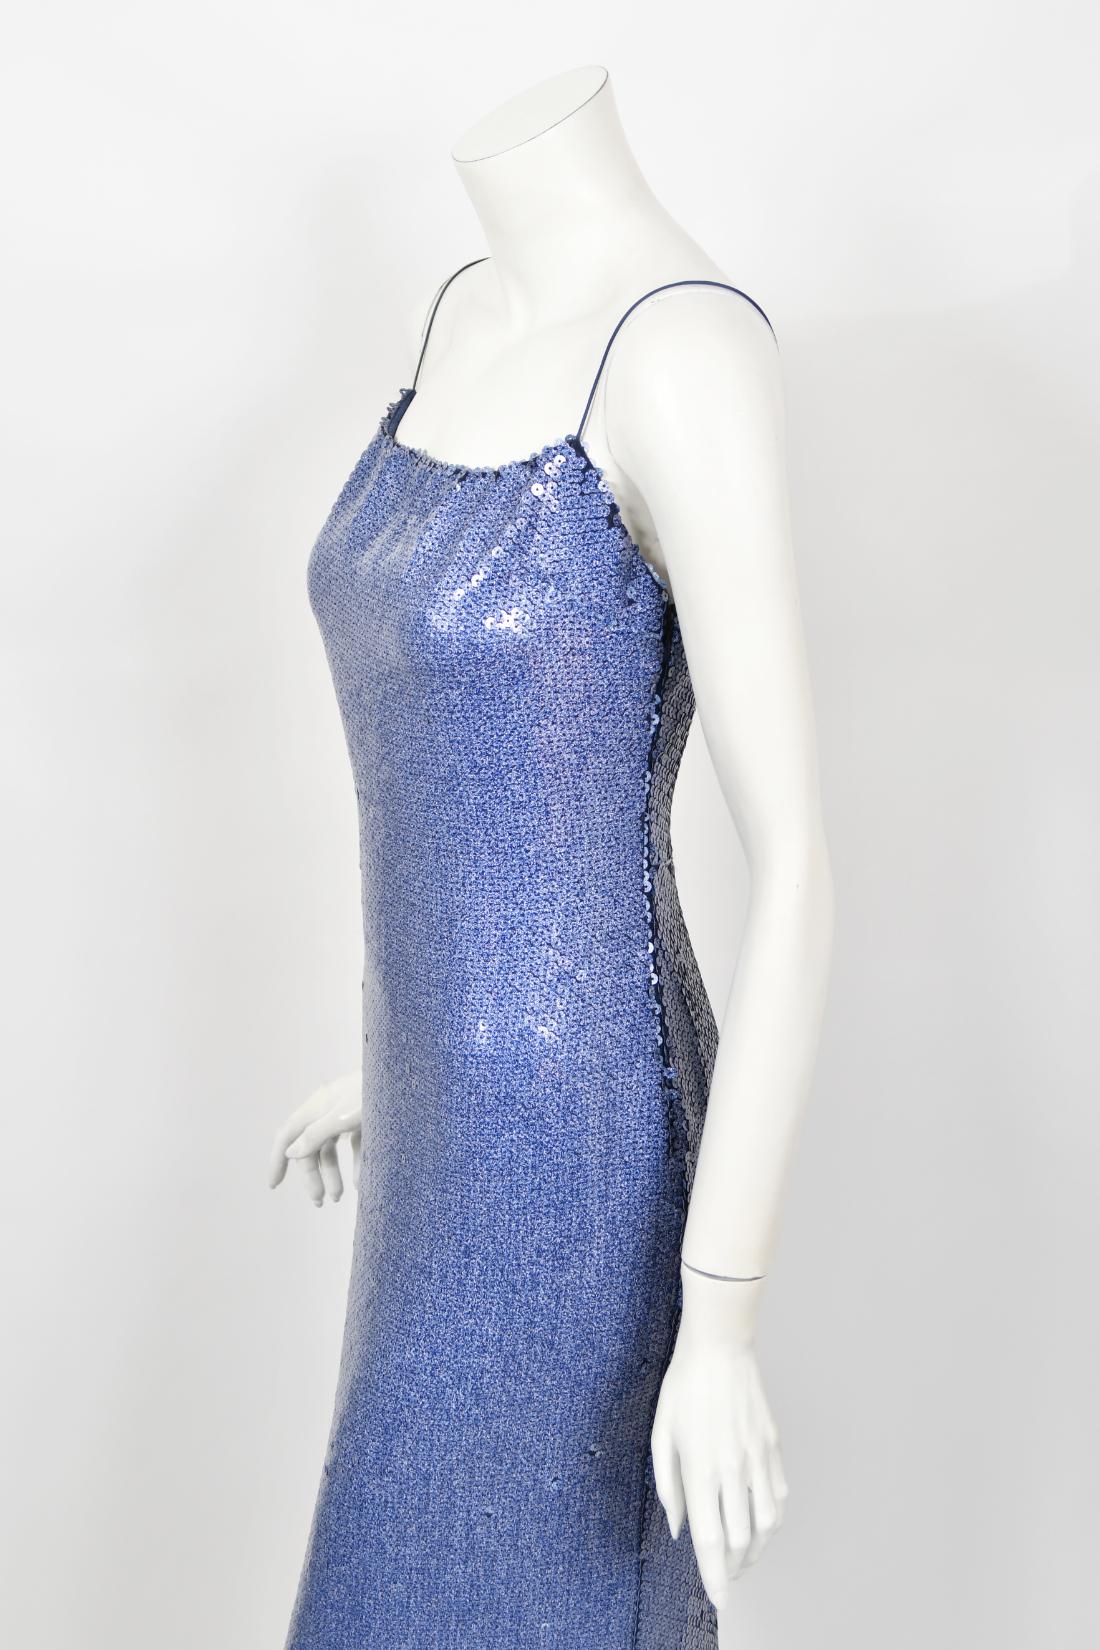 2000 Christian Dior by John Galliano Fully-Sequin Ocean Blue Bias-Cut Slip Gown  2